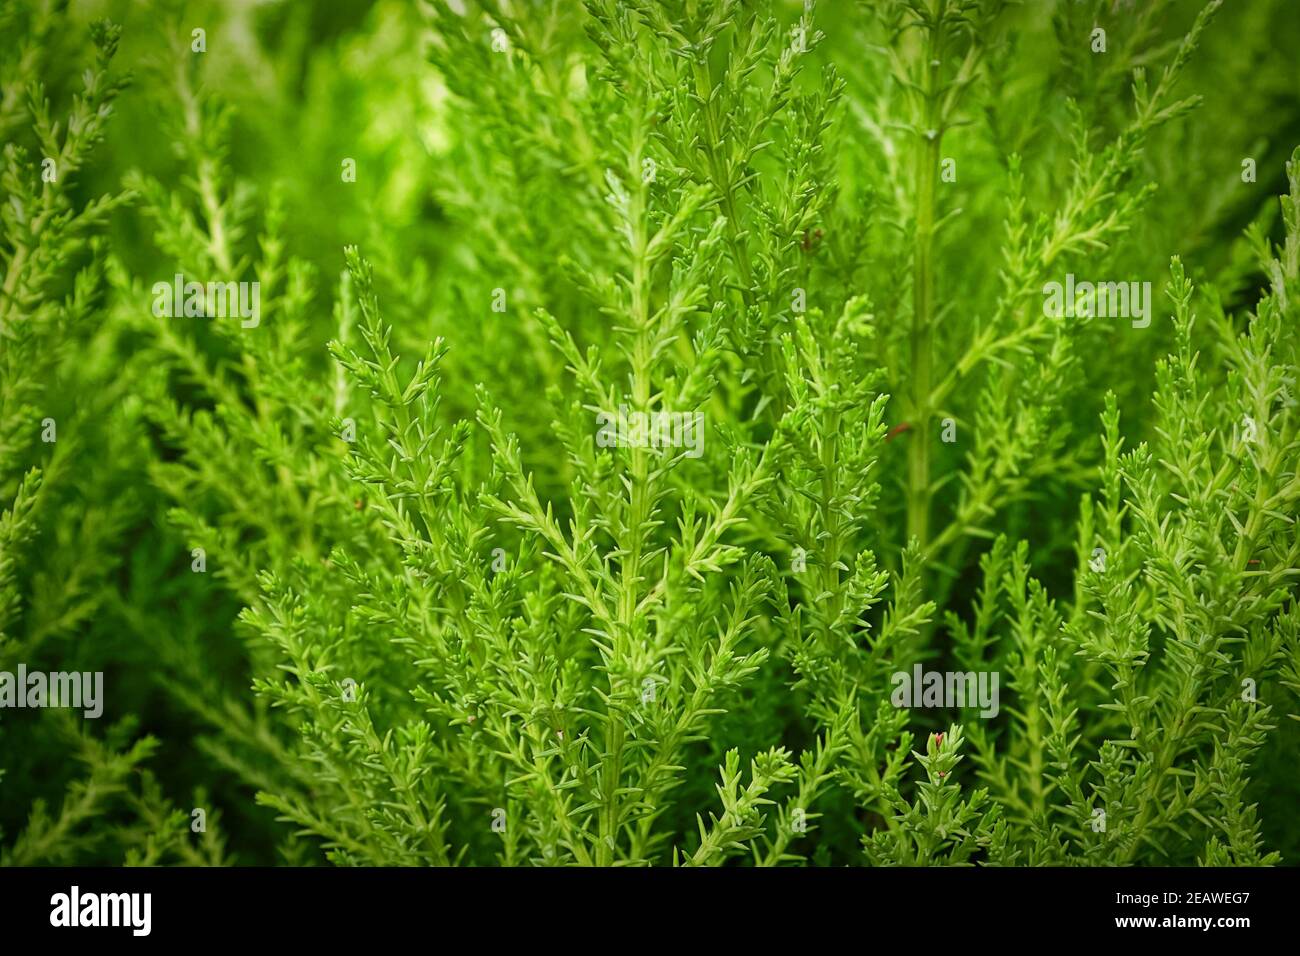 Backgrounds of tiny green needles on a lemon cypress tree Stock Photo